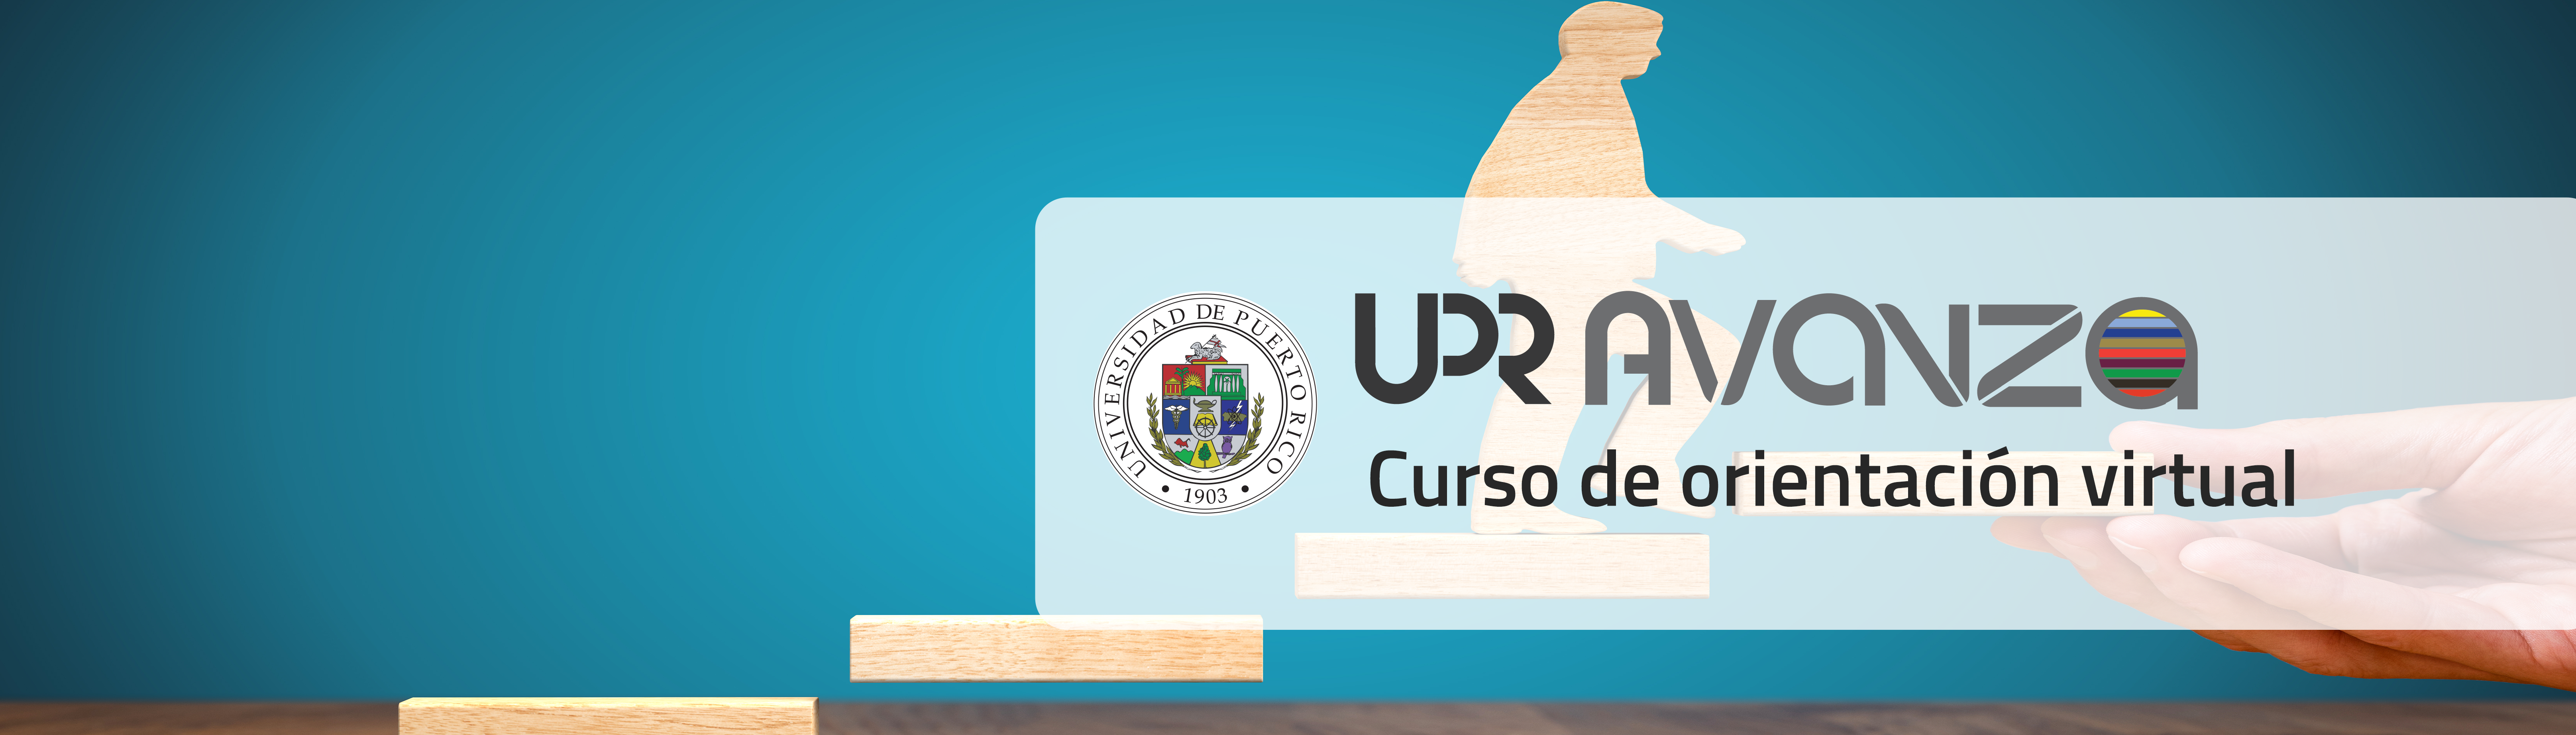 UPR-Avanza-orientacionvirtual.png